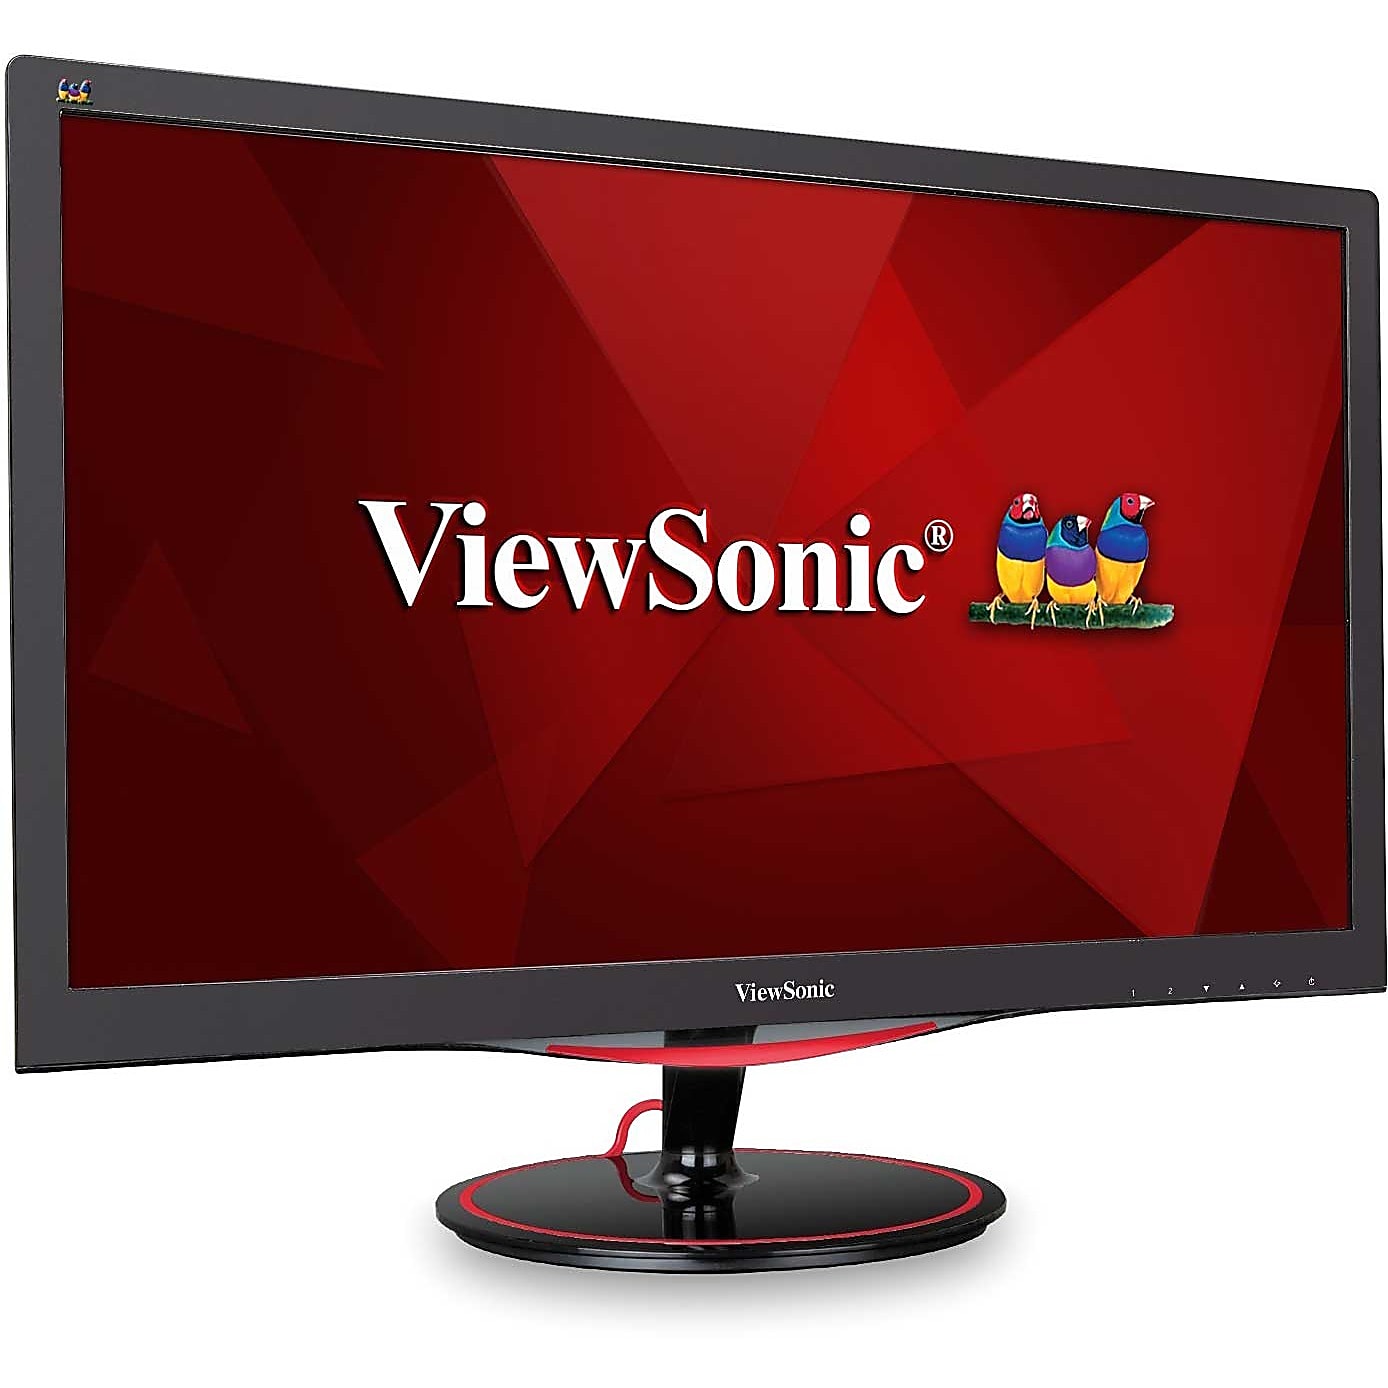 ViewSonic 24" FHD LED LCD Gaming Monitor - VX2458-MHD